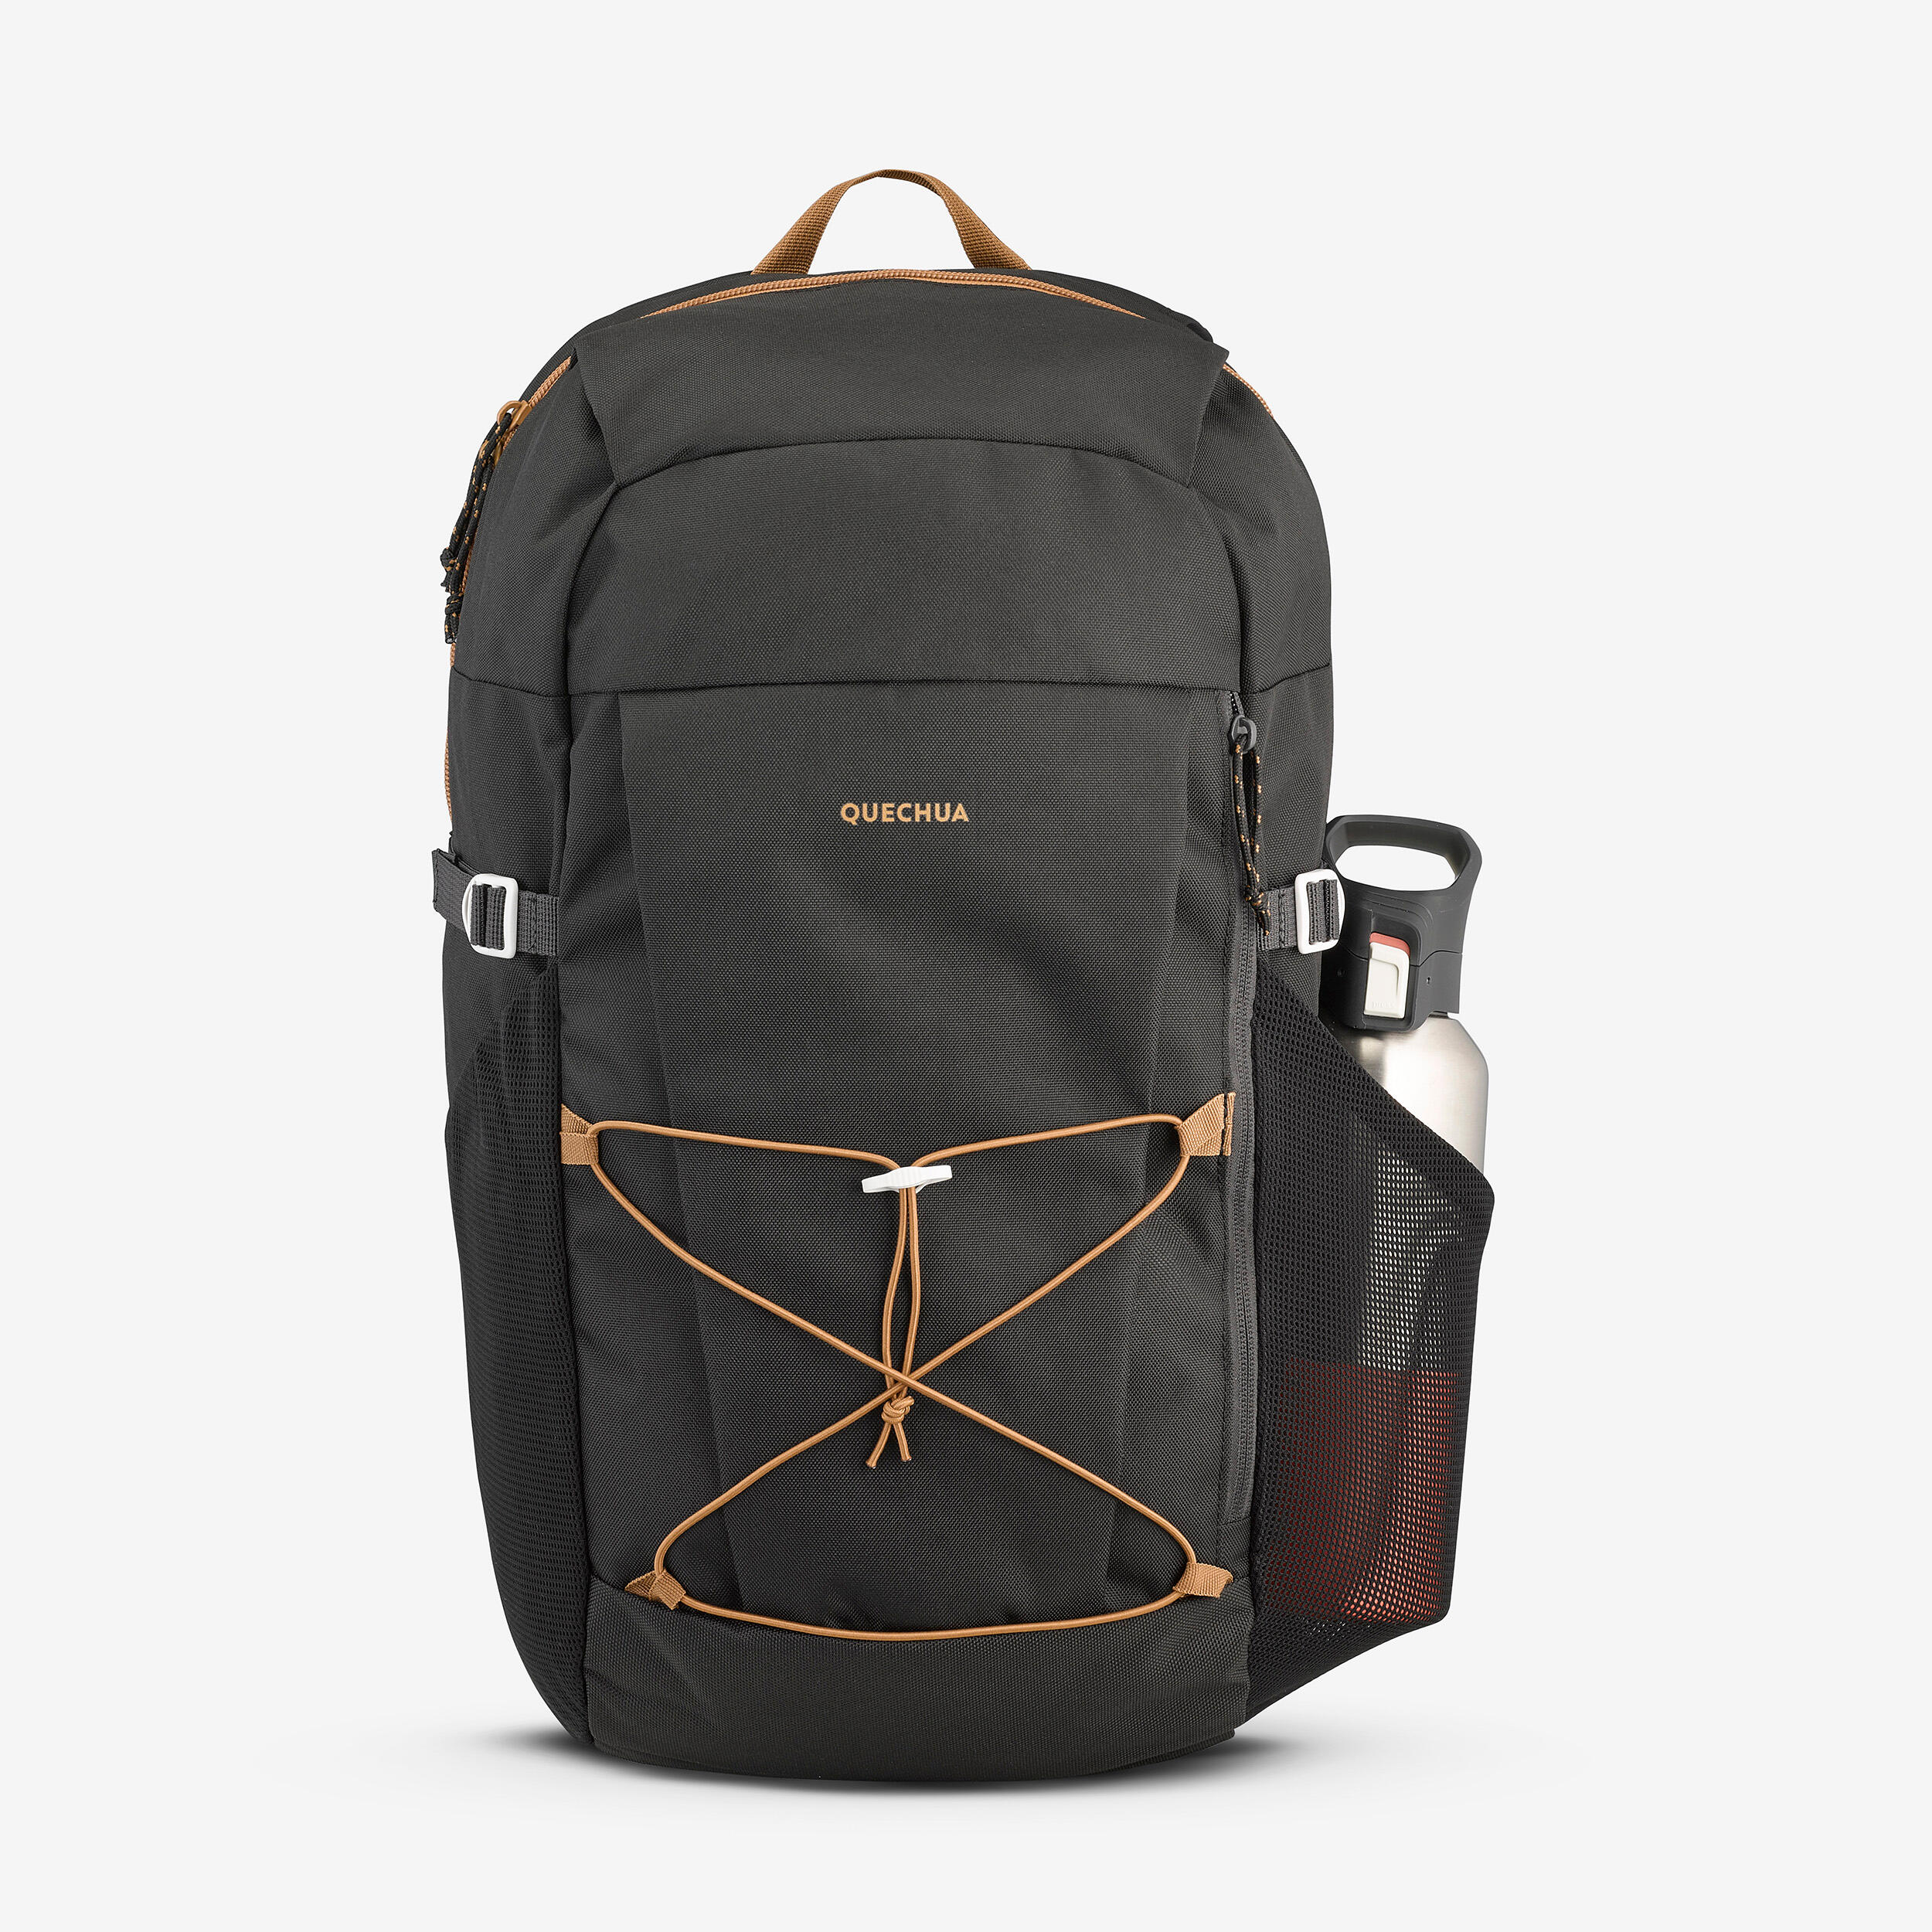 Hiking backpack 30L - NH Arpenaz 100 5/10